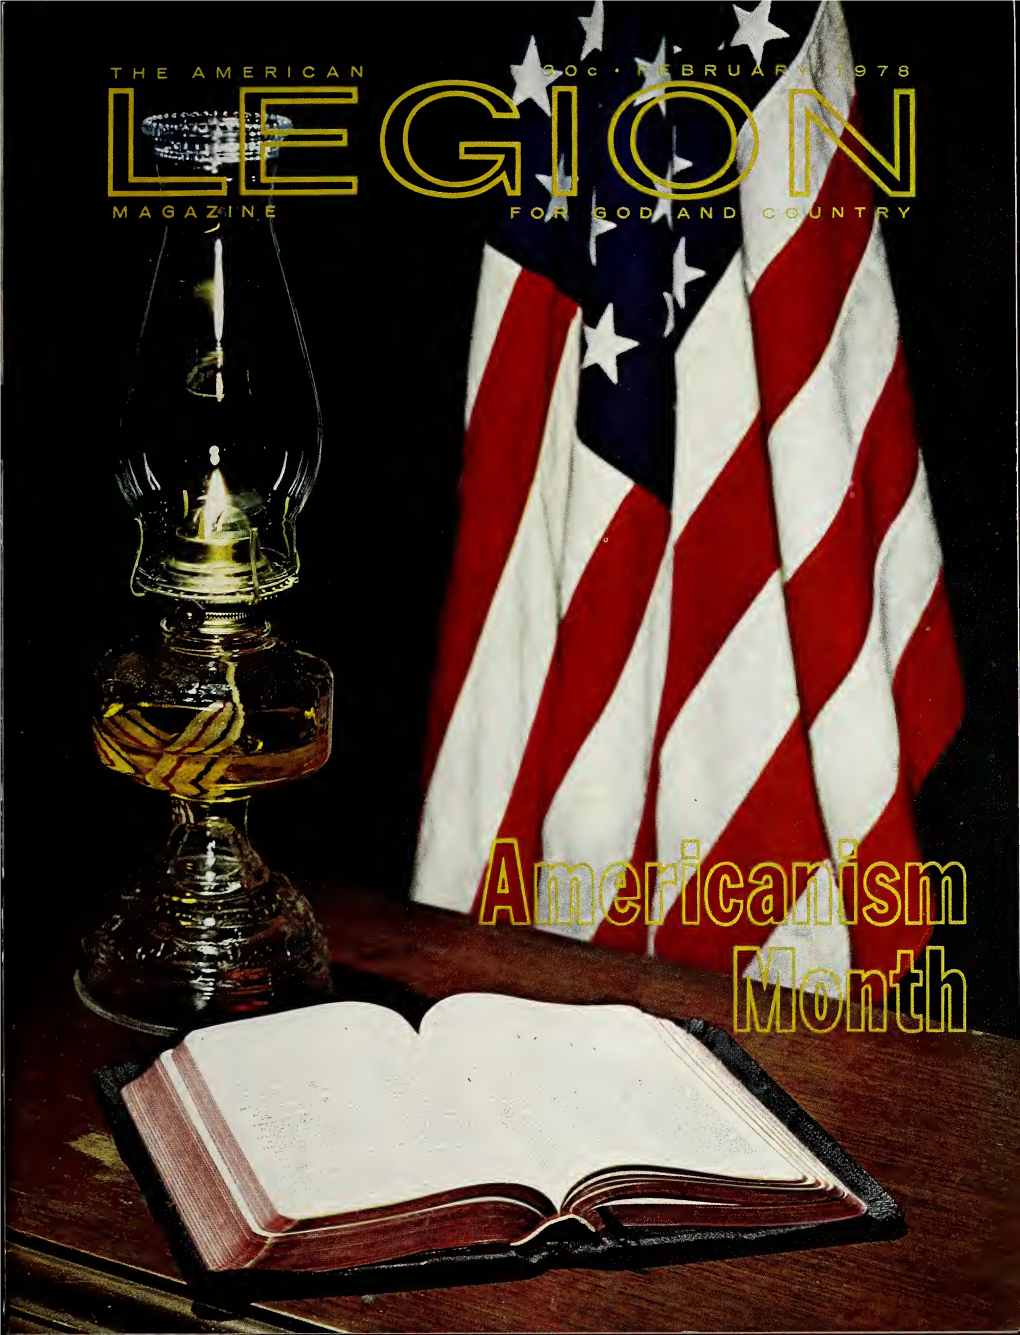 The American Legion Magazine [Volume 104, No. 2 (February 1978)]